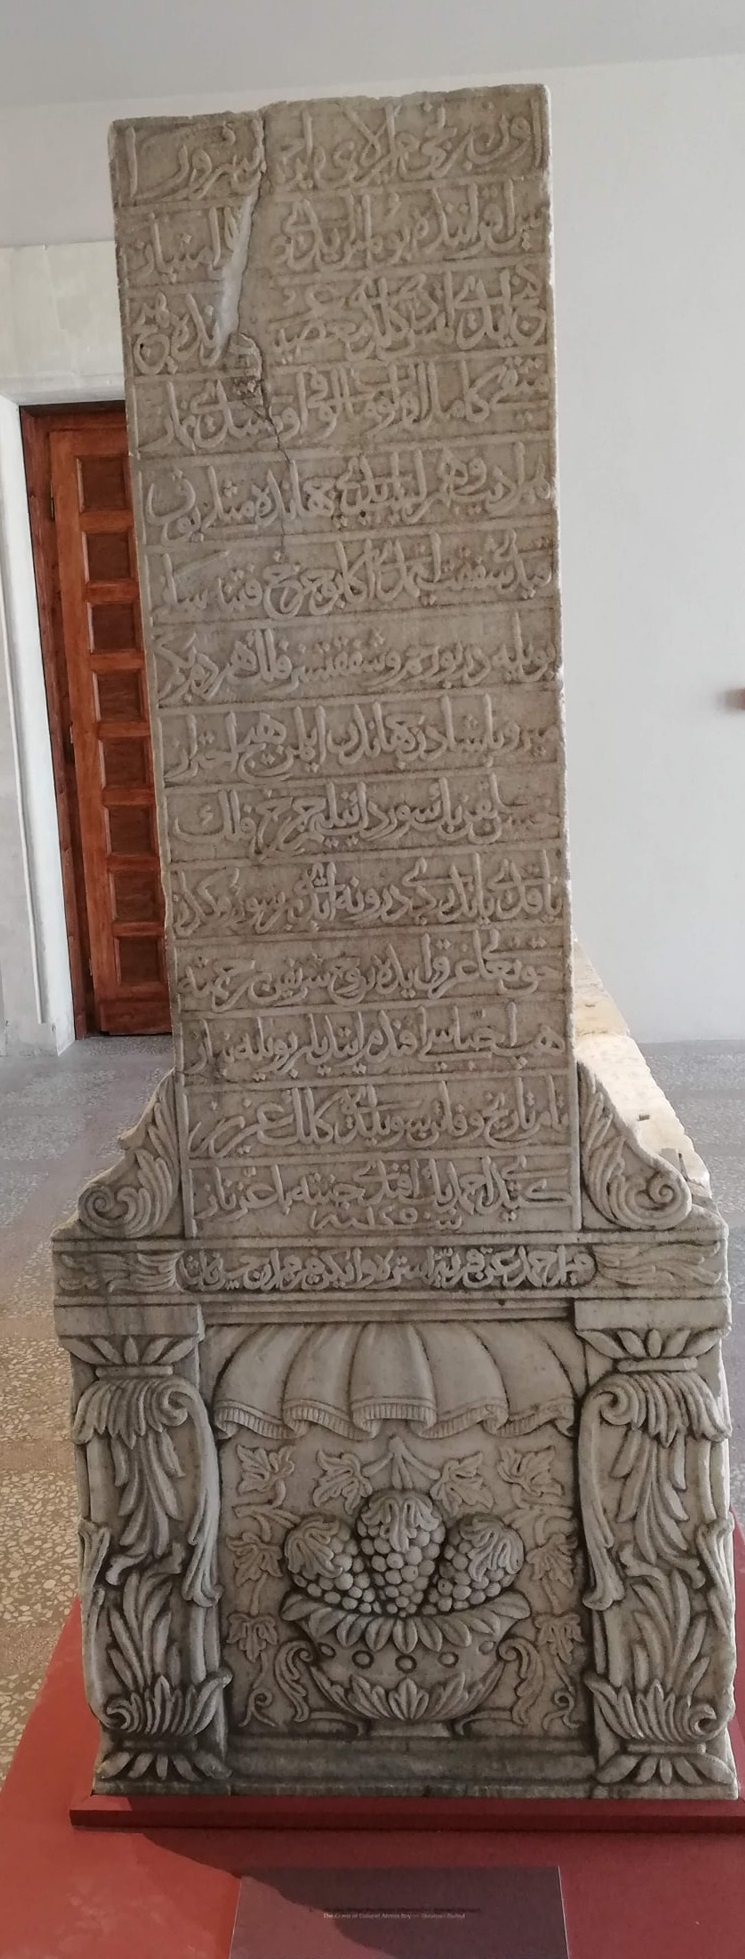 Miralay Ahmet Bey Mezarı , Tarsus Arkeoloji Muzesi